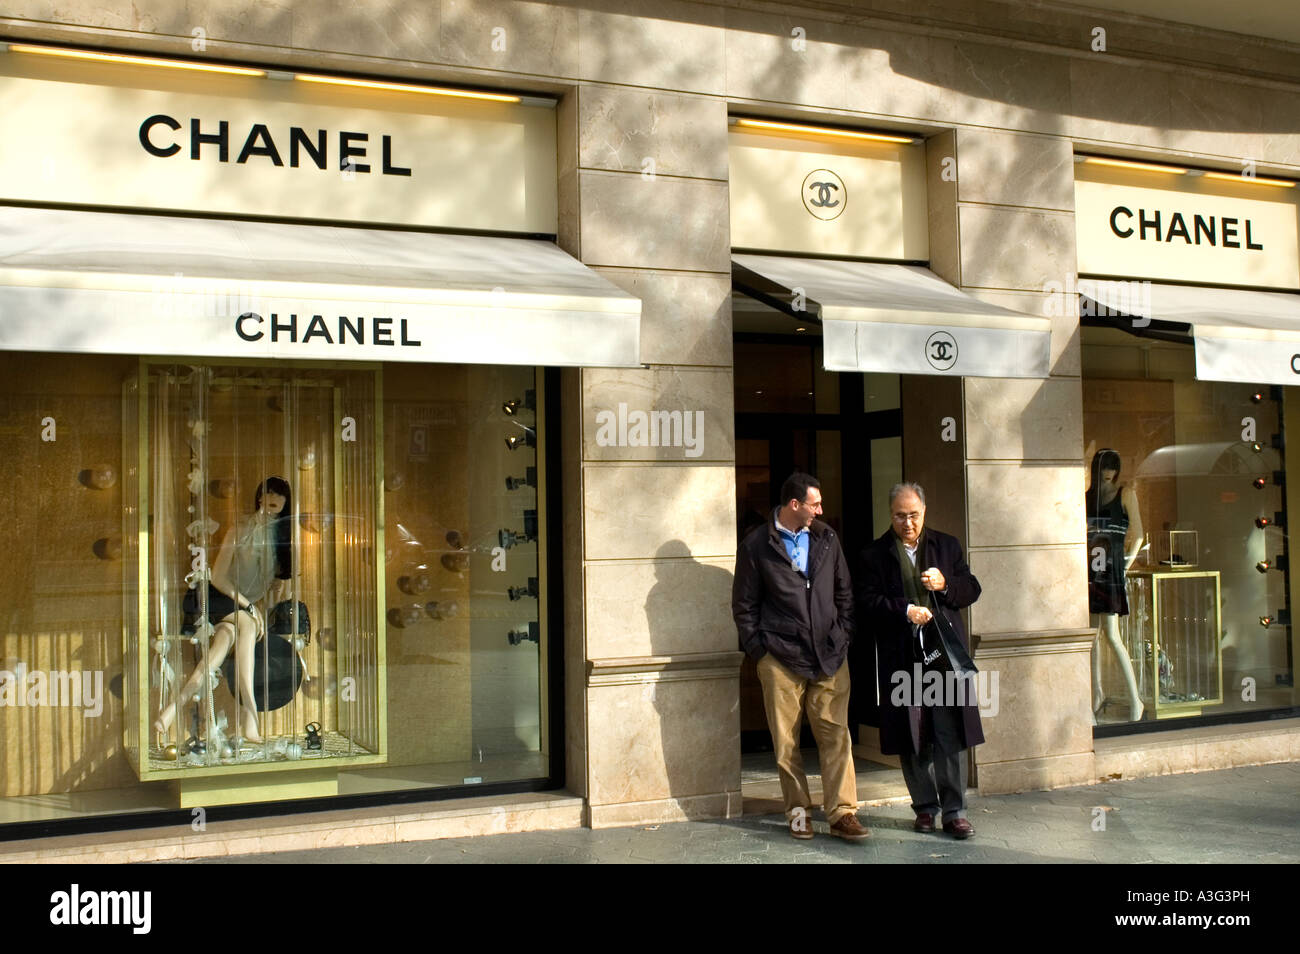 Coco Chanel Passeig de Gracia Chanel trendy fashion luxury fashionable  Barcelona Spain Stock Photo - Alamy